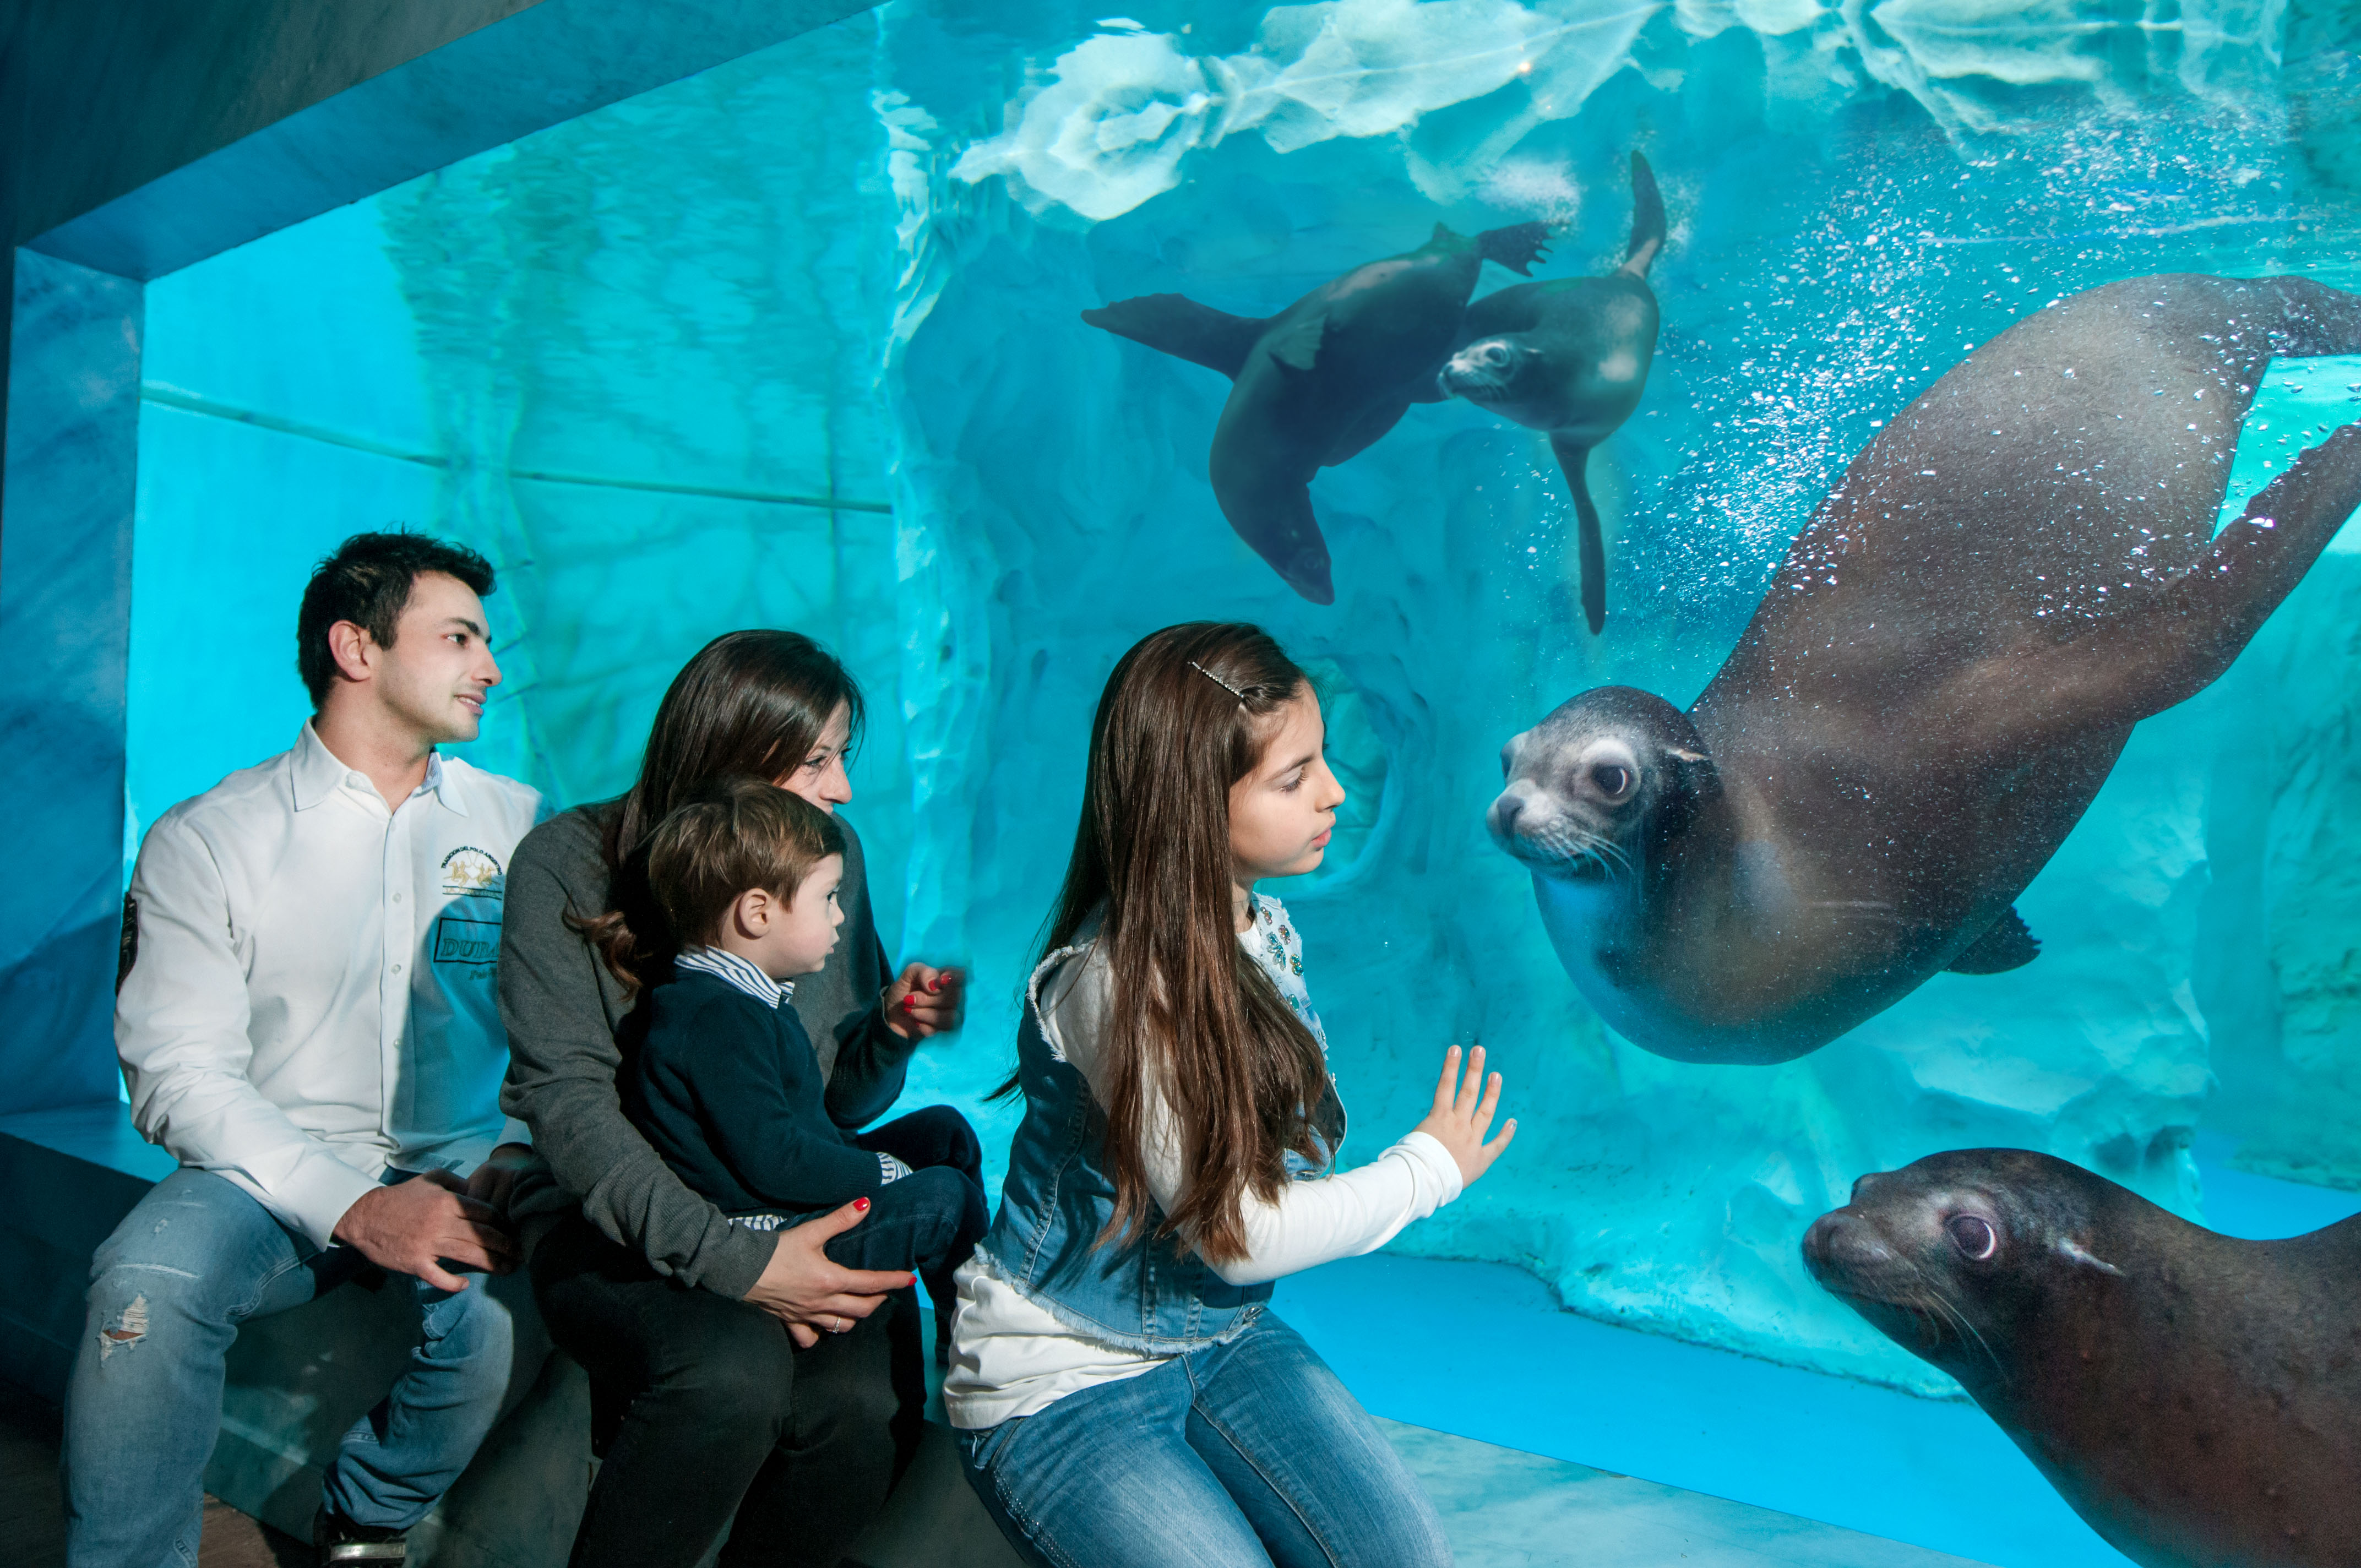 Gardaland SEA LIFE Aquarium - A un passo dai leoni marini